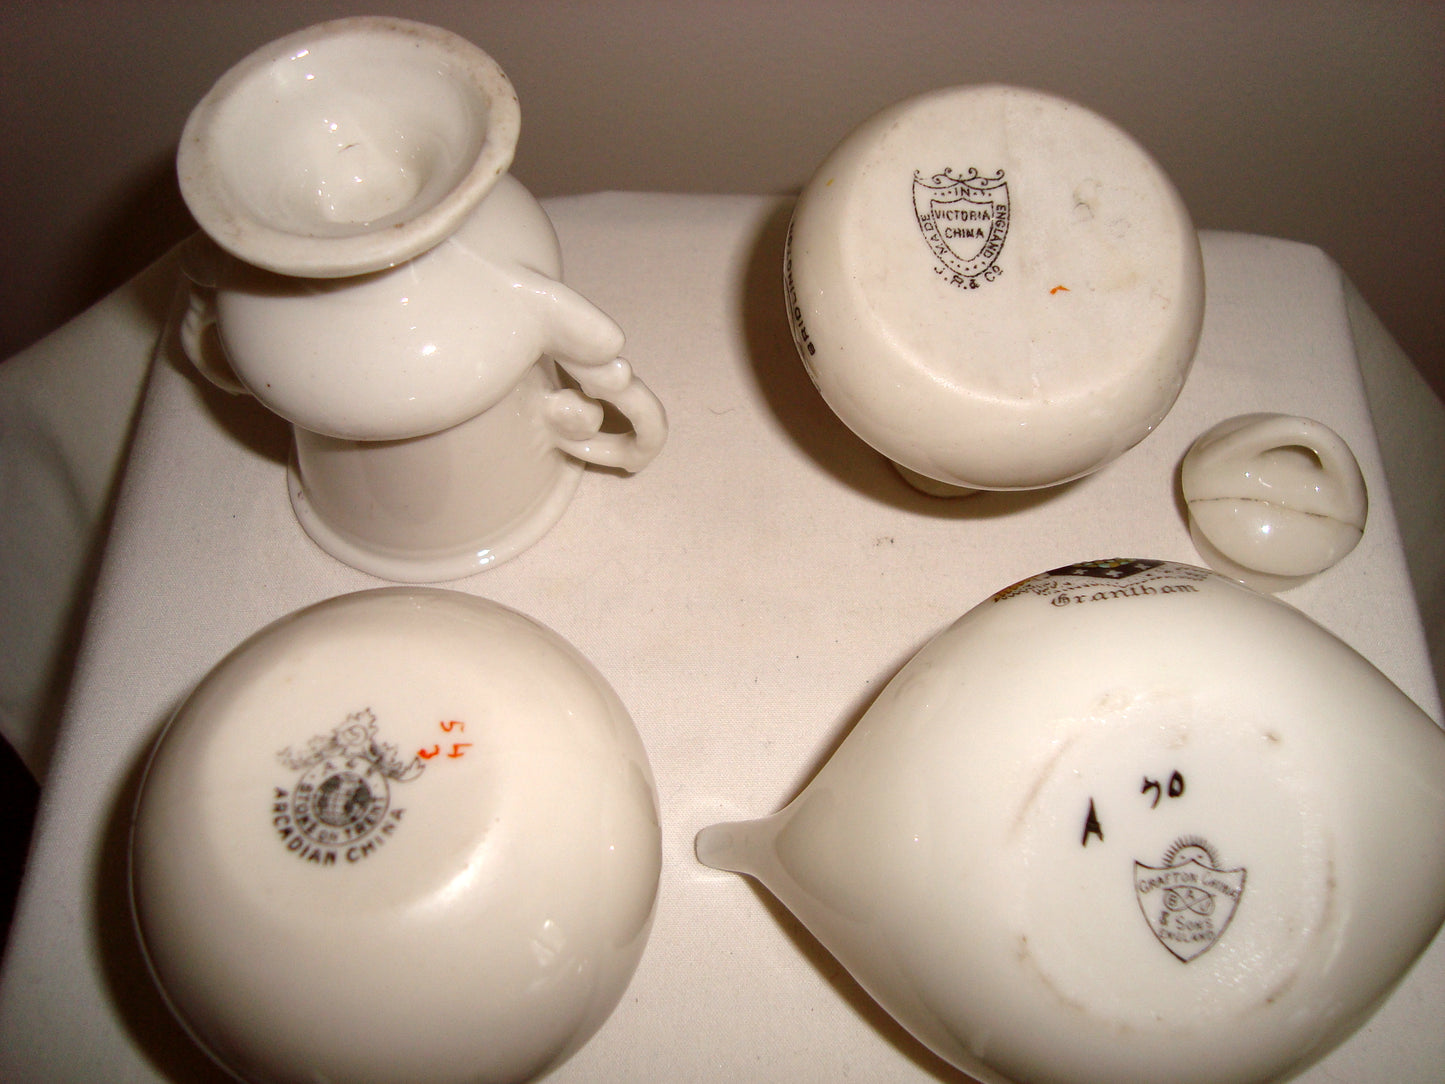 Four Pieces Vintage Souvenir Armorial Pottery Crested China